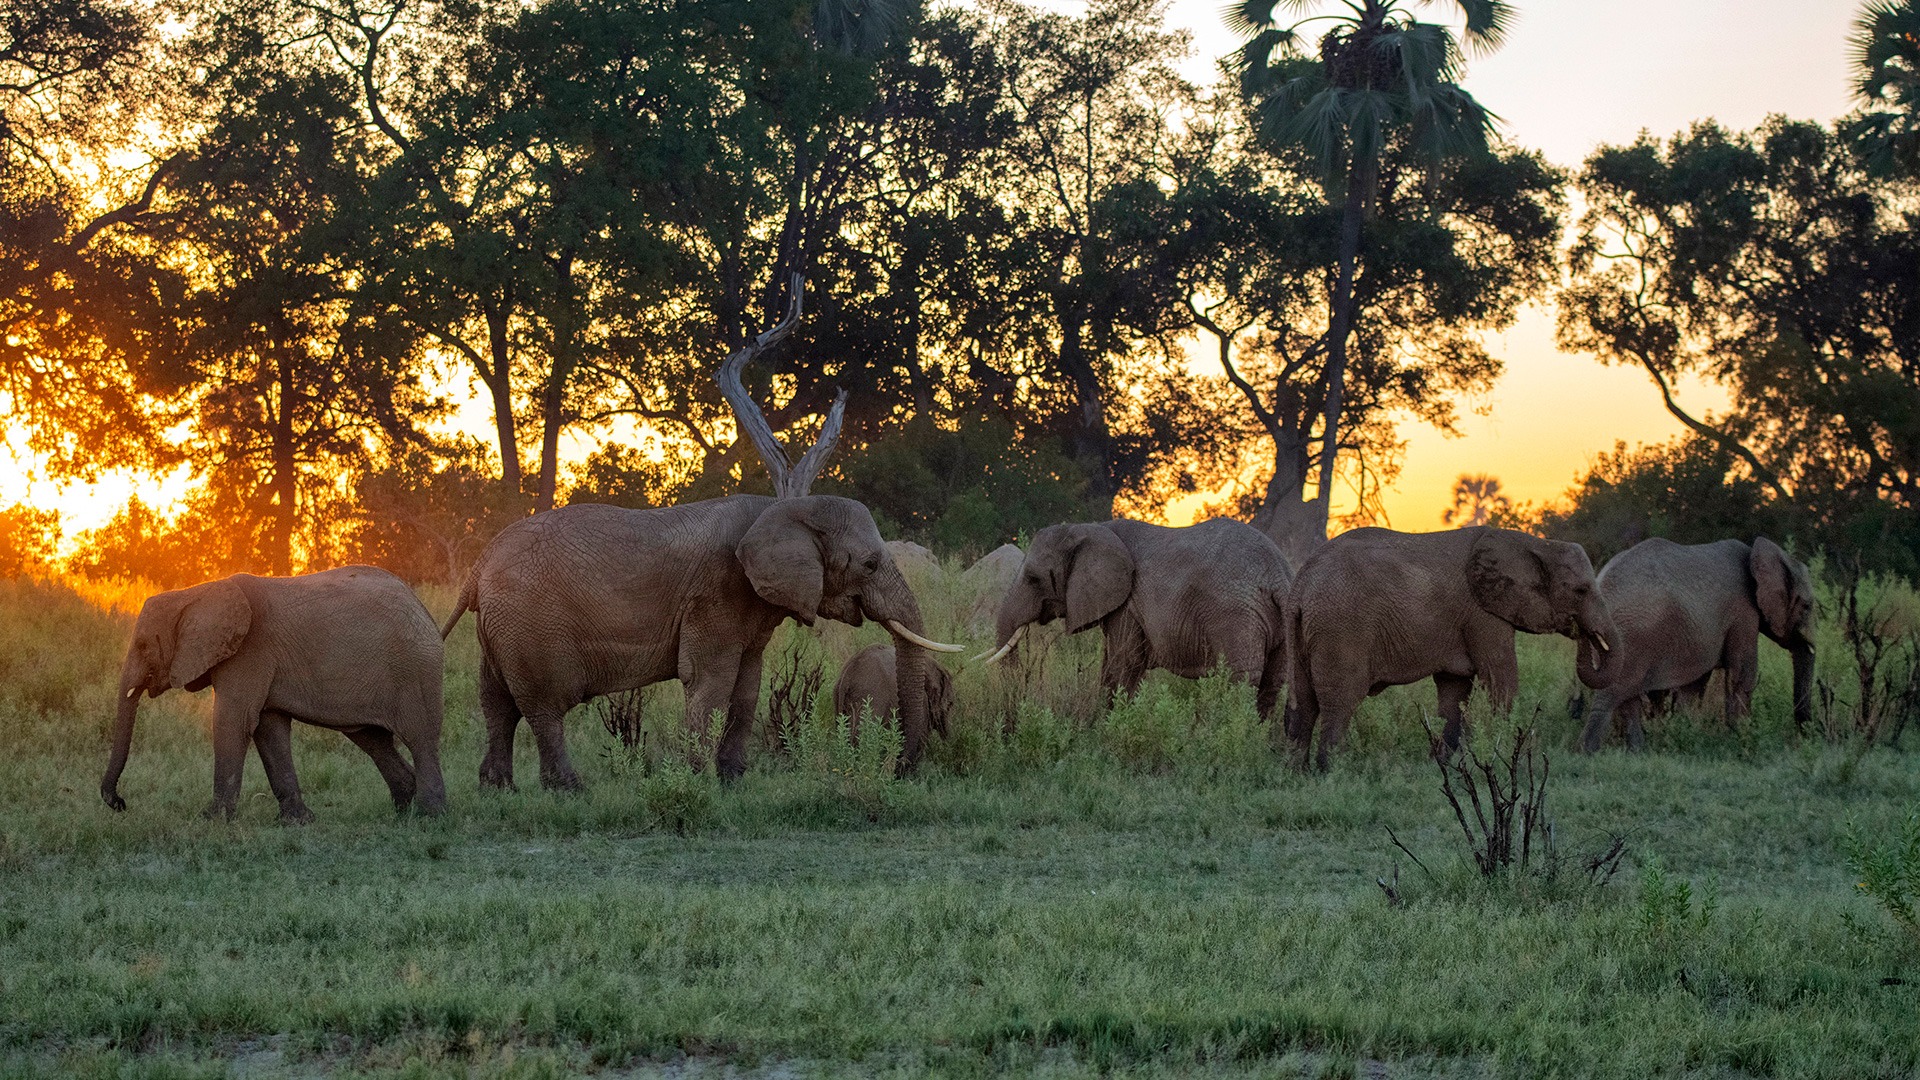 Elephants grazing in the Okavango Delta, Botswana